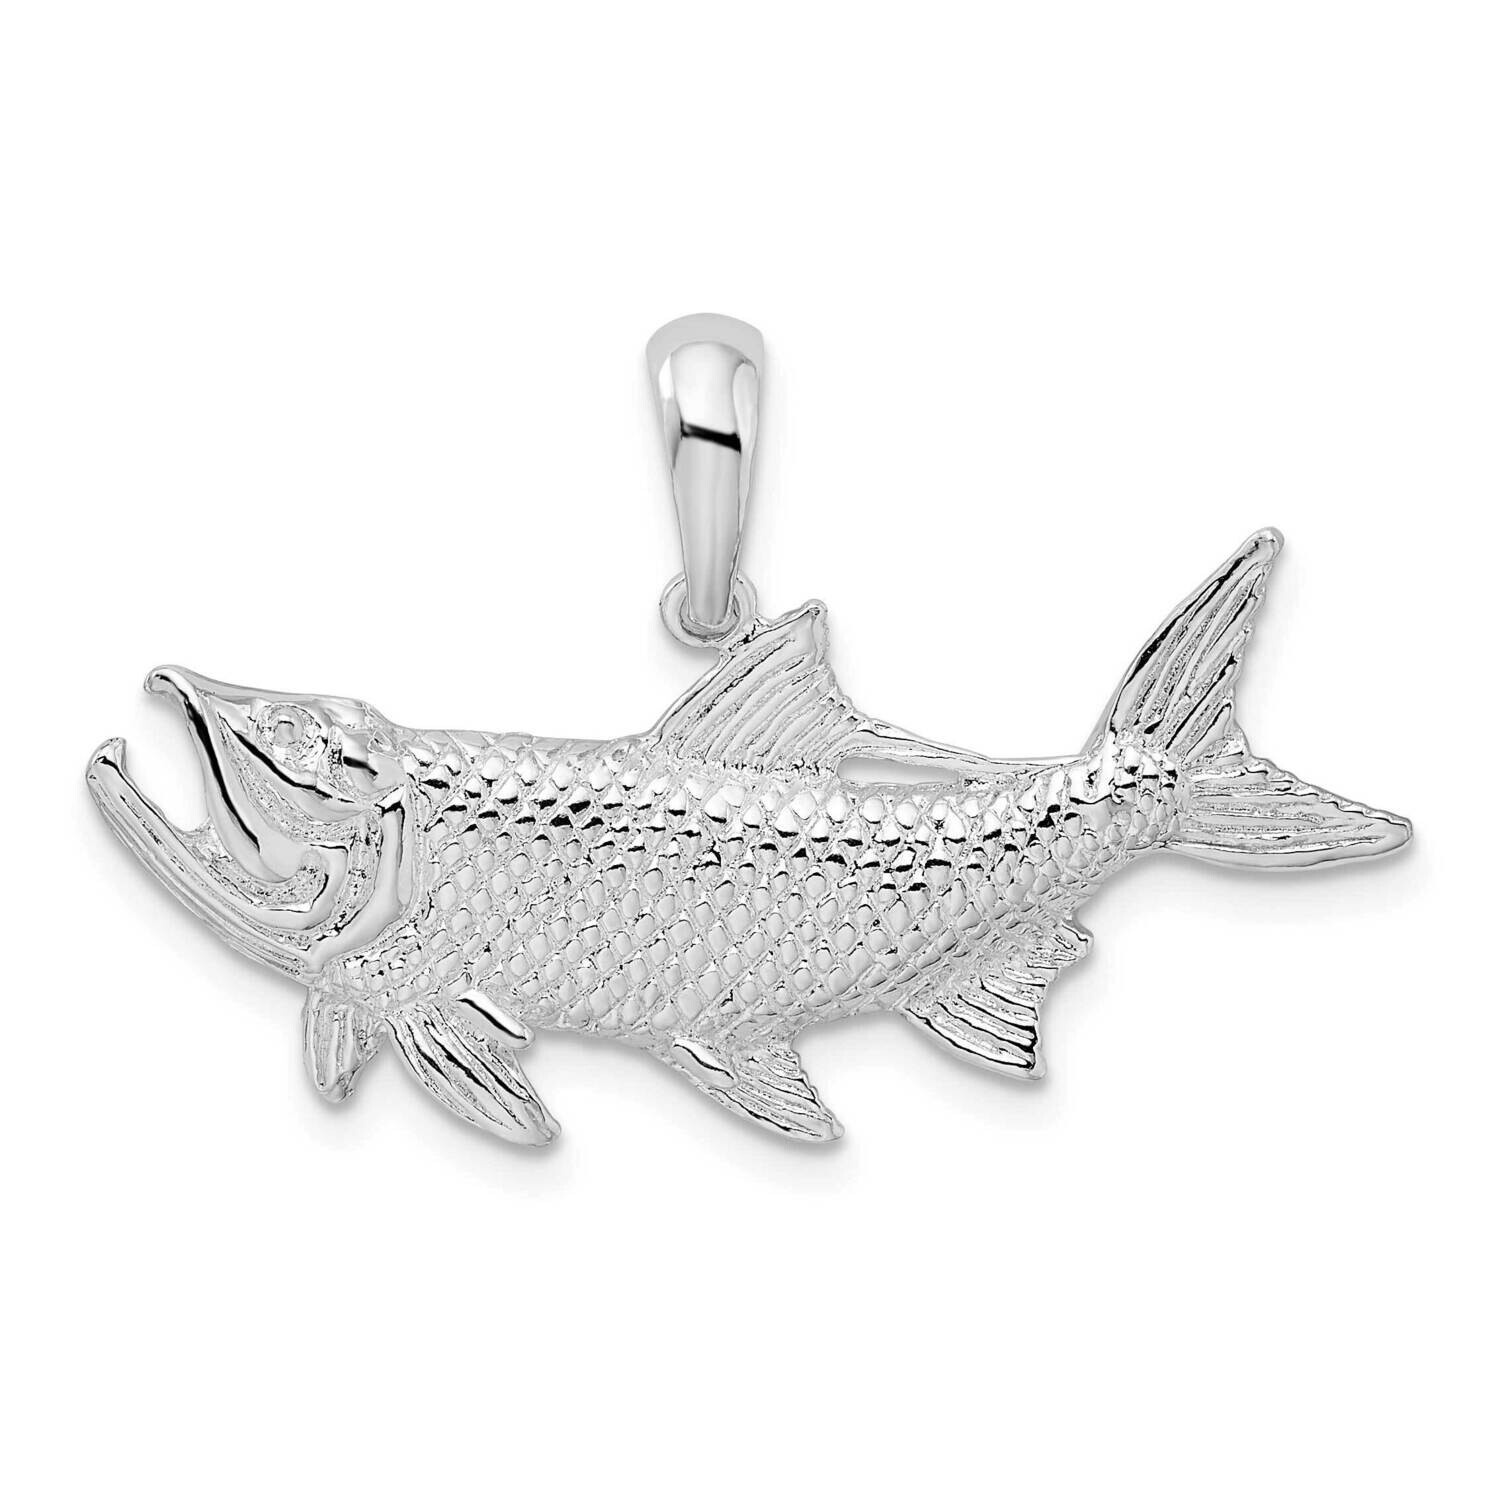 Tarpon Fish Pendant Sterling Silver Polished QC10150